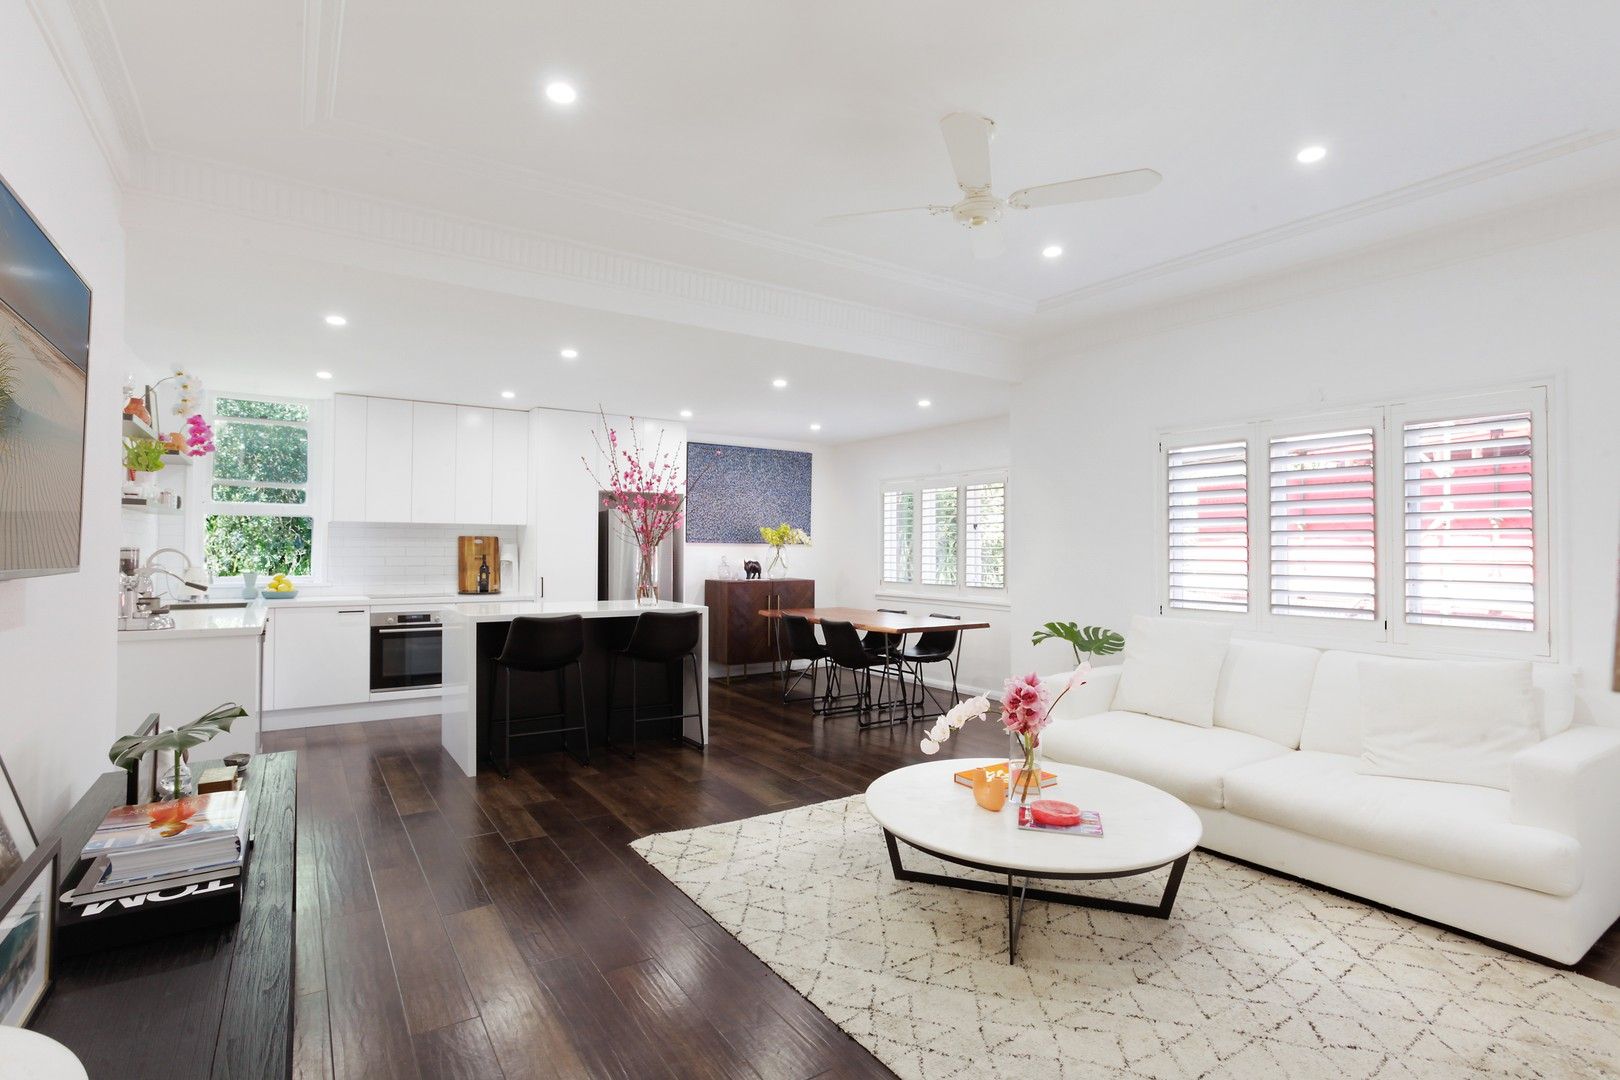 2 bedrooms Apartment / Unit / Flat in 6/24 Streatfield Road BELLEVUE HILL NSW, 2023